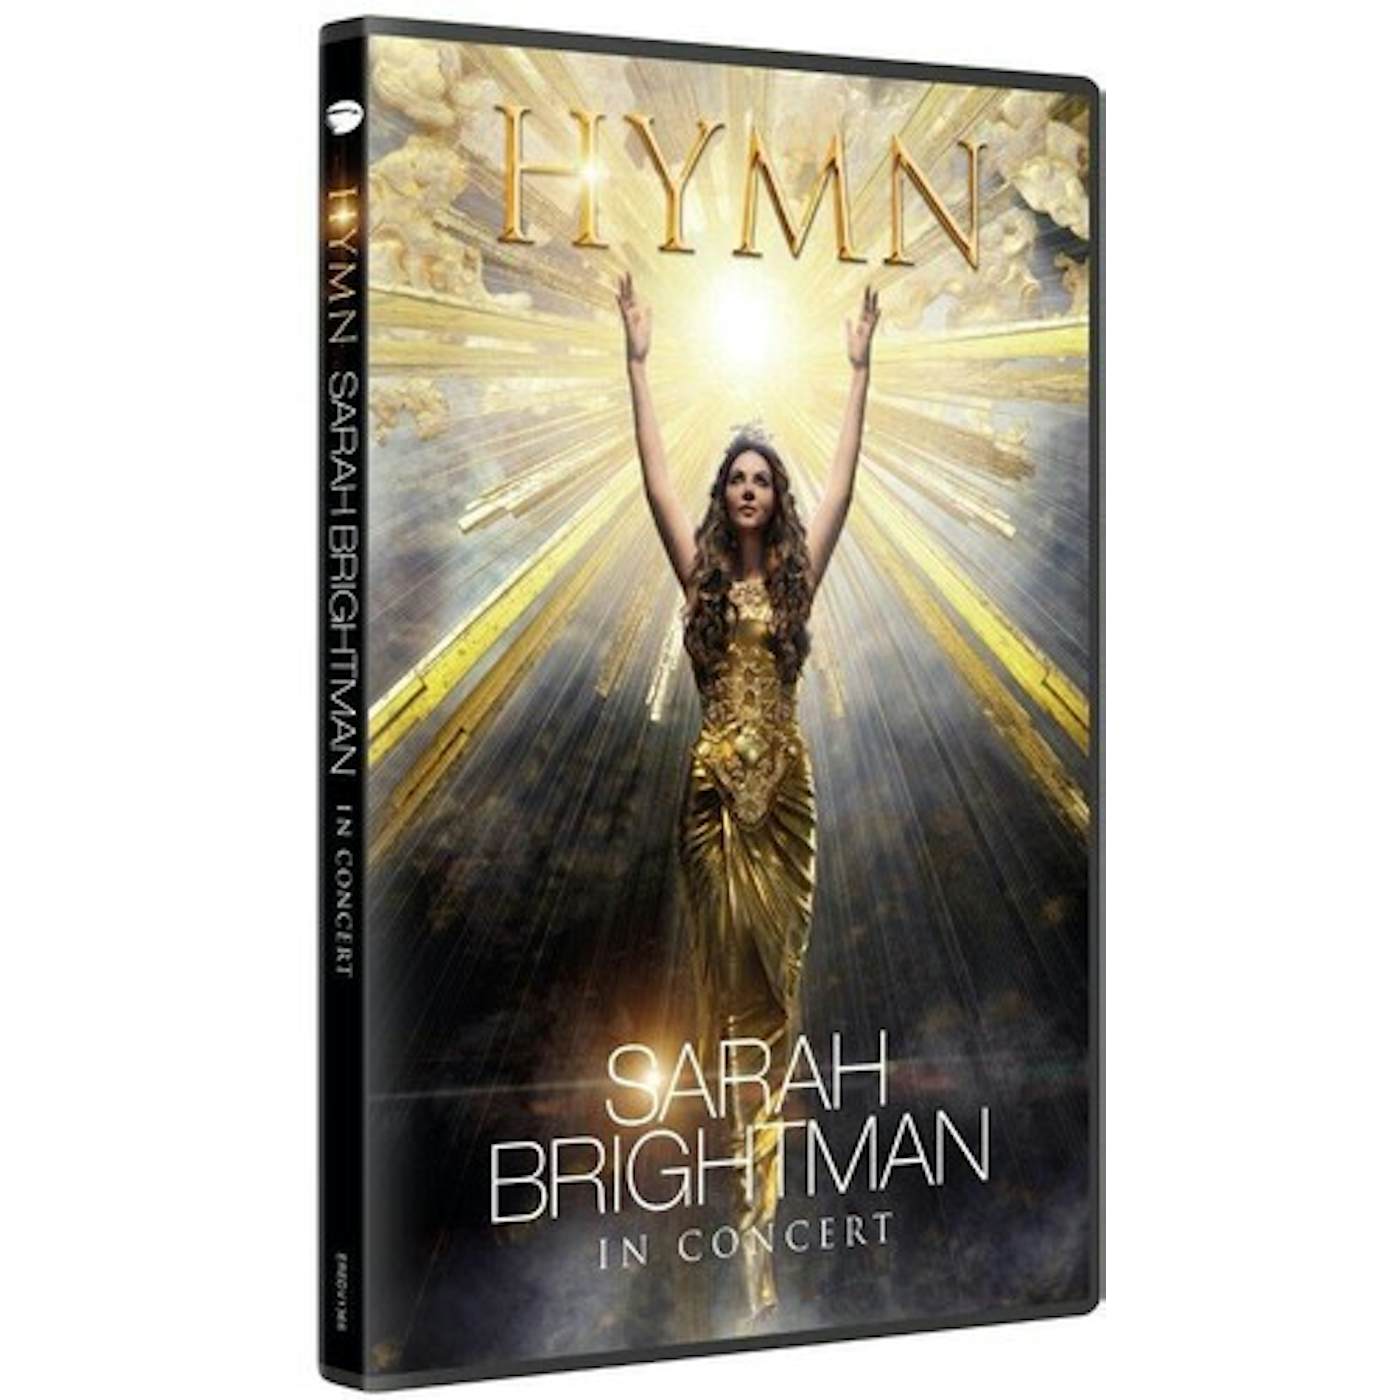 Sarah Brightman HYMN IN CONCERT DVD